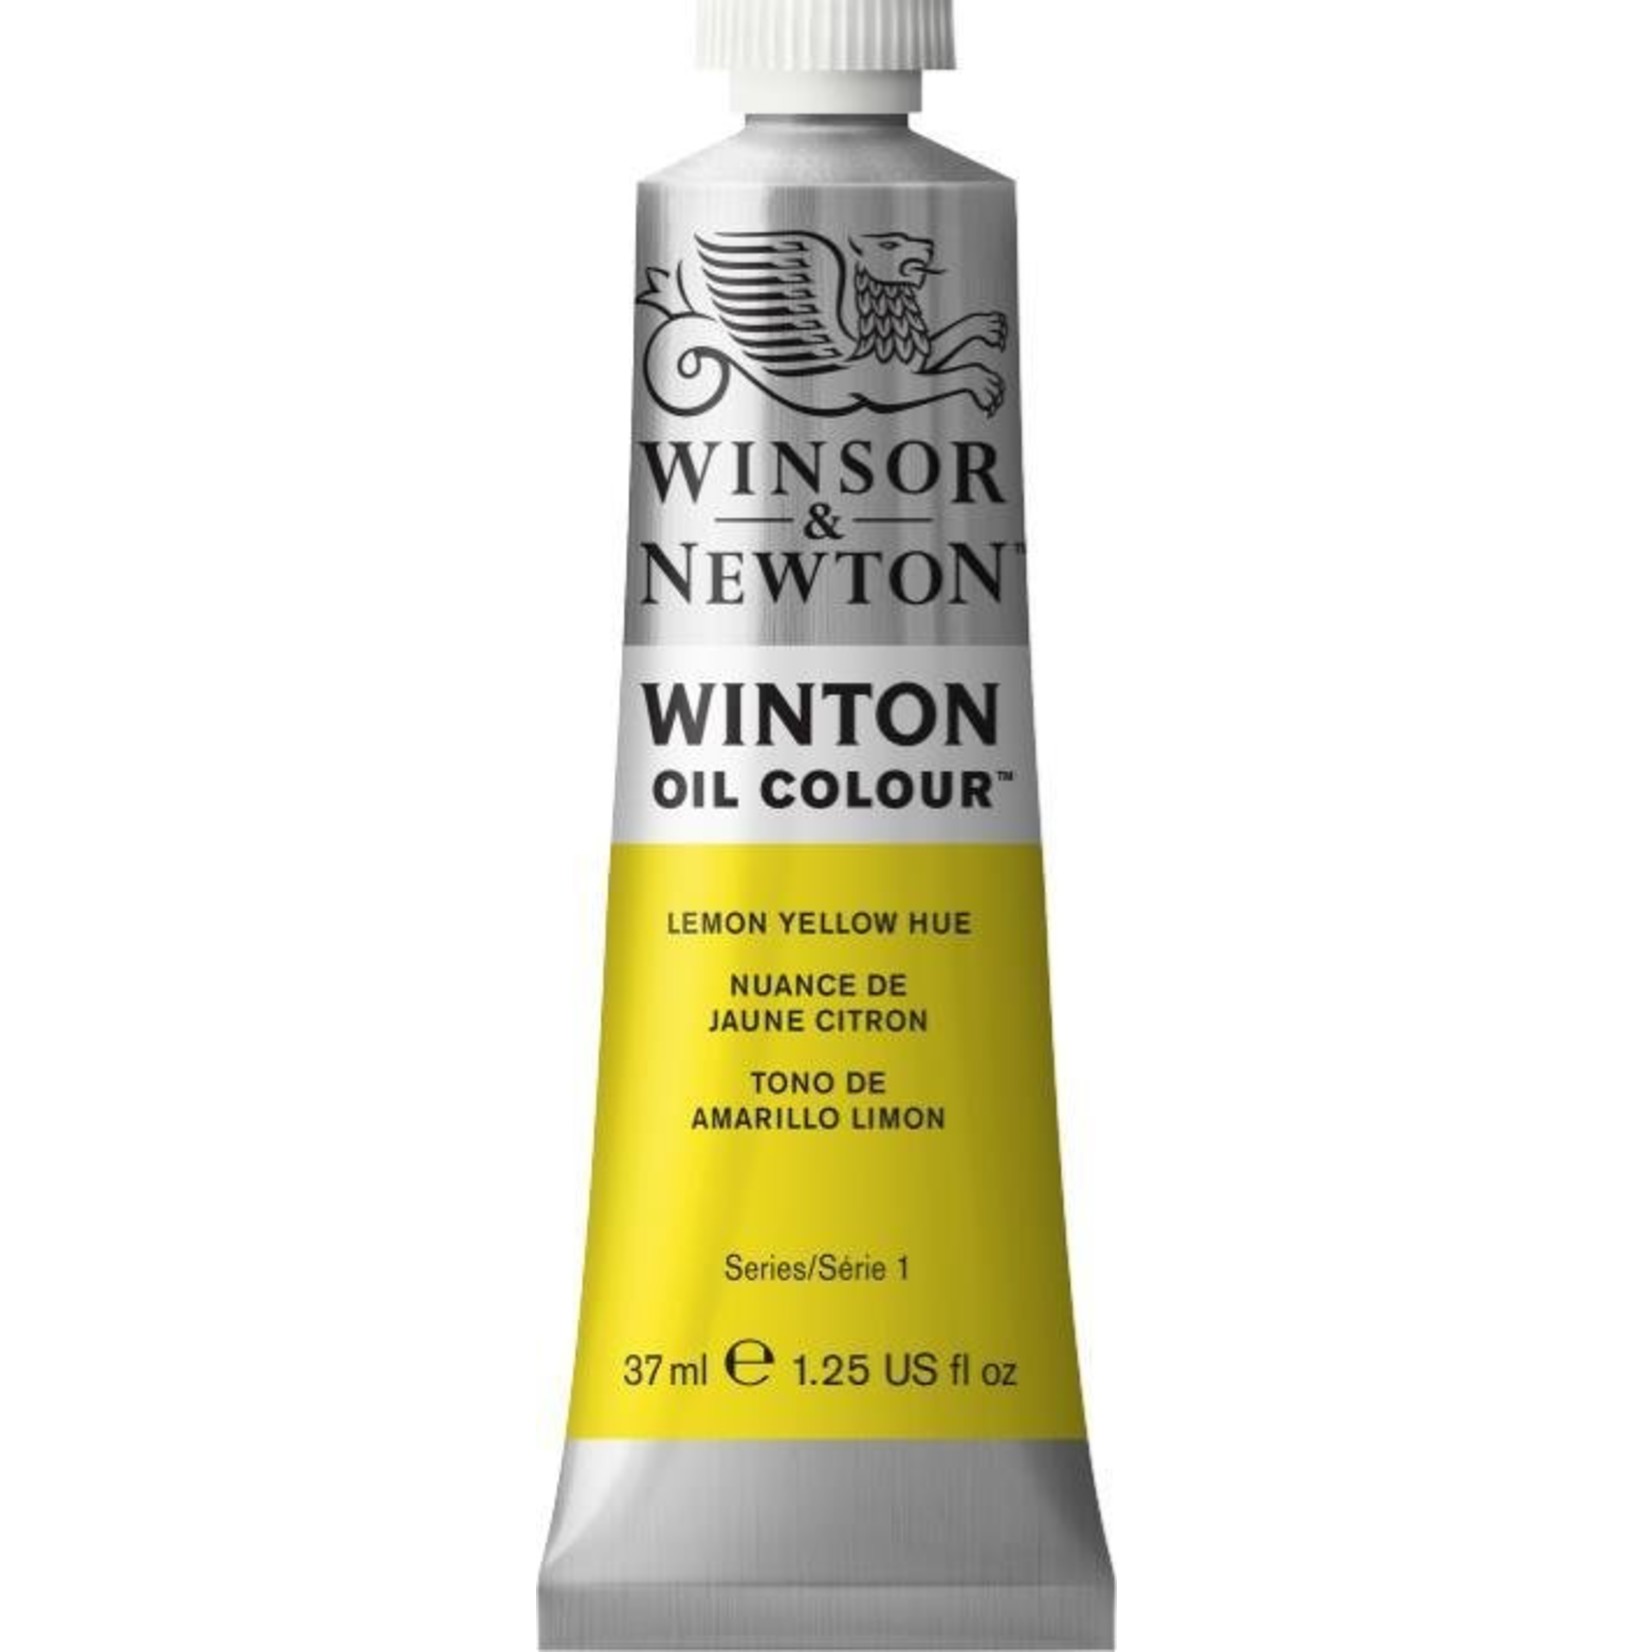 WINSOR NEWTON WINTON OIL COLOUR LEMON YELLOW HUE 37ml